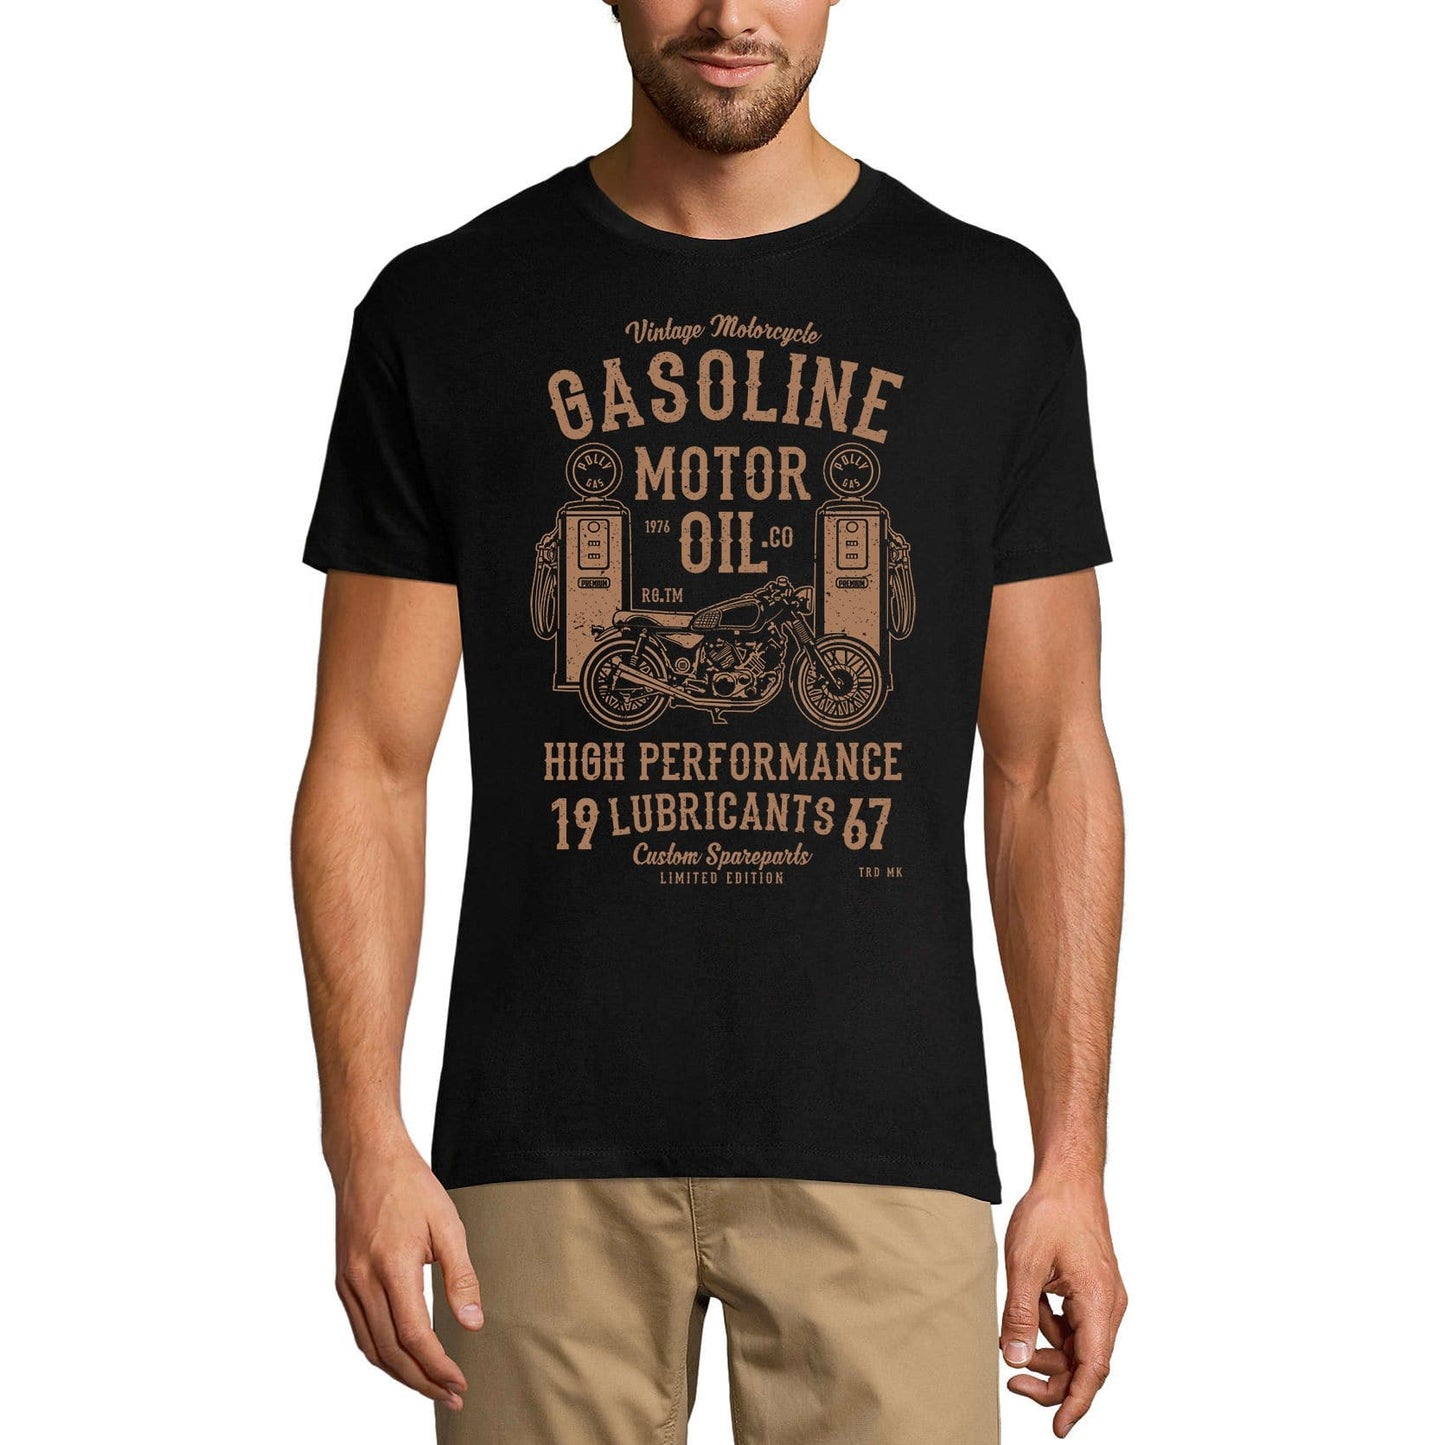 ULTRABASIC Men's Graphic T-Shirt Vintage Motorcycle Gasoline Motor Oil 1967 Limited Edition Tee Shirt